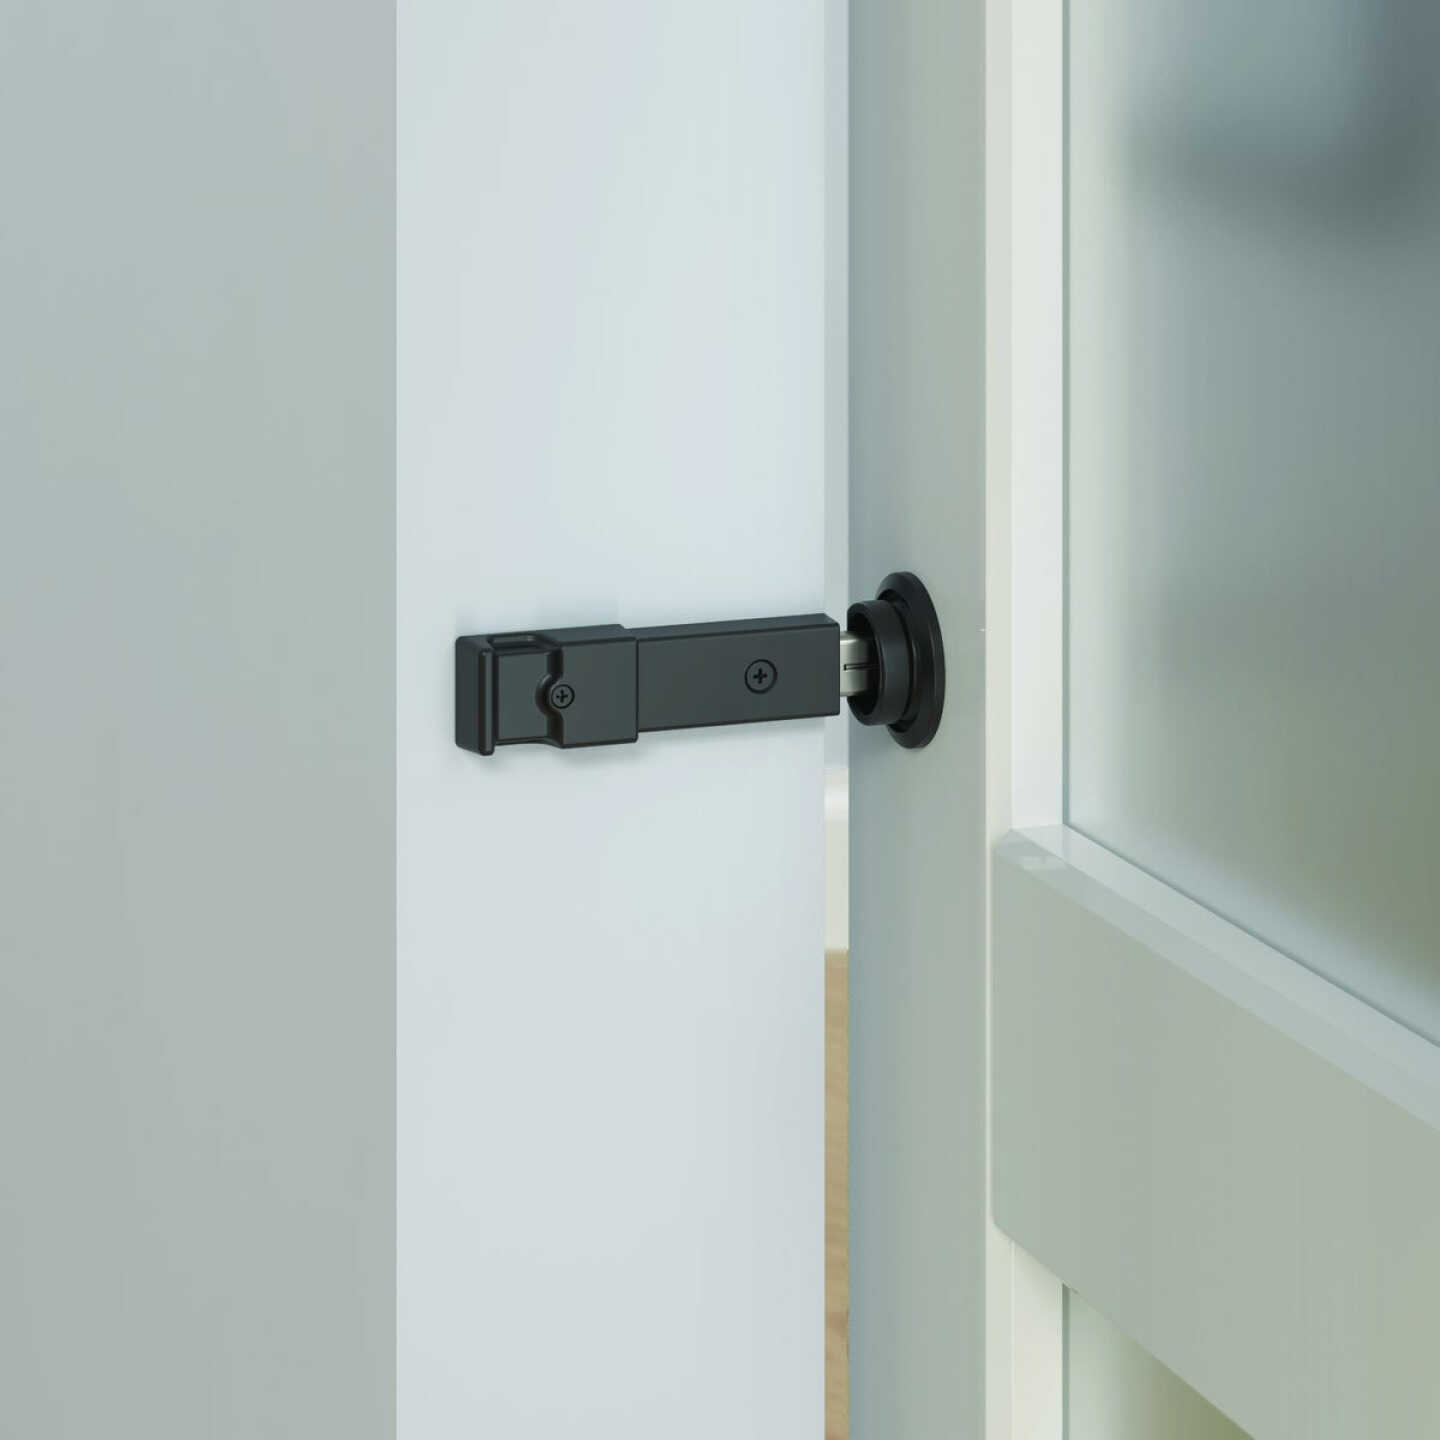 Hook Latch Barn Door Lock W/ Screws for Hardware Gate Closet